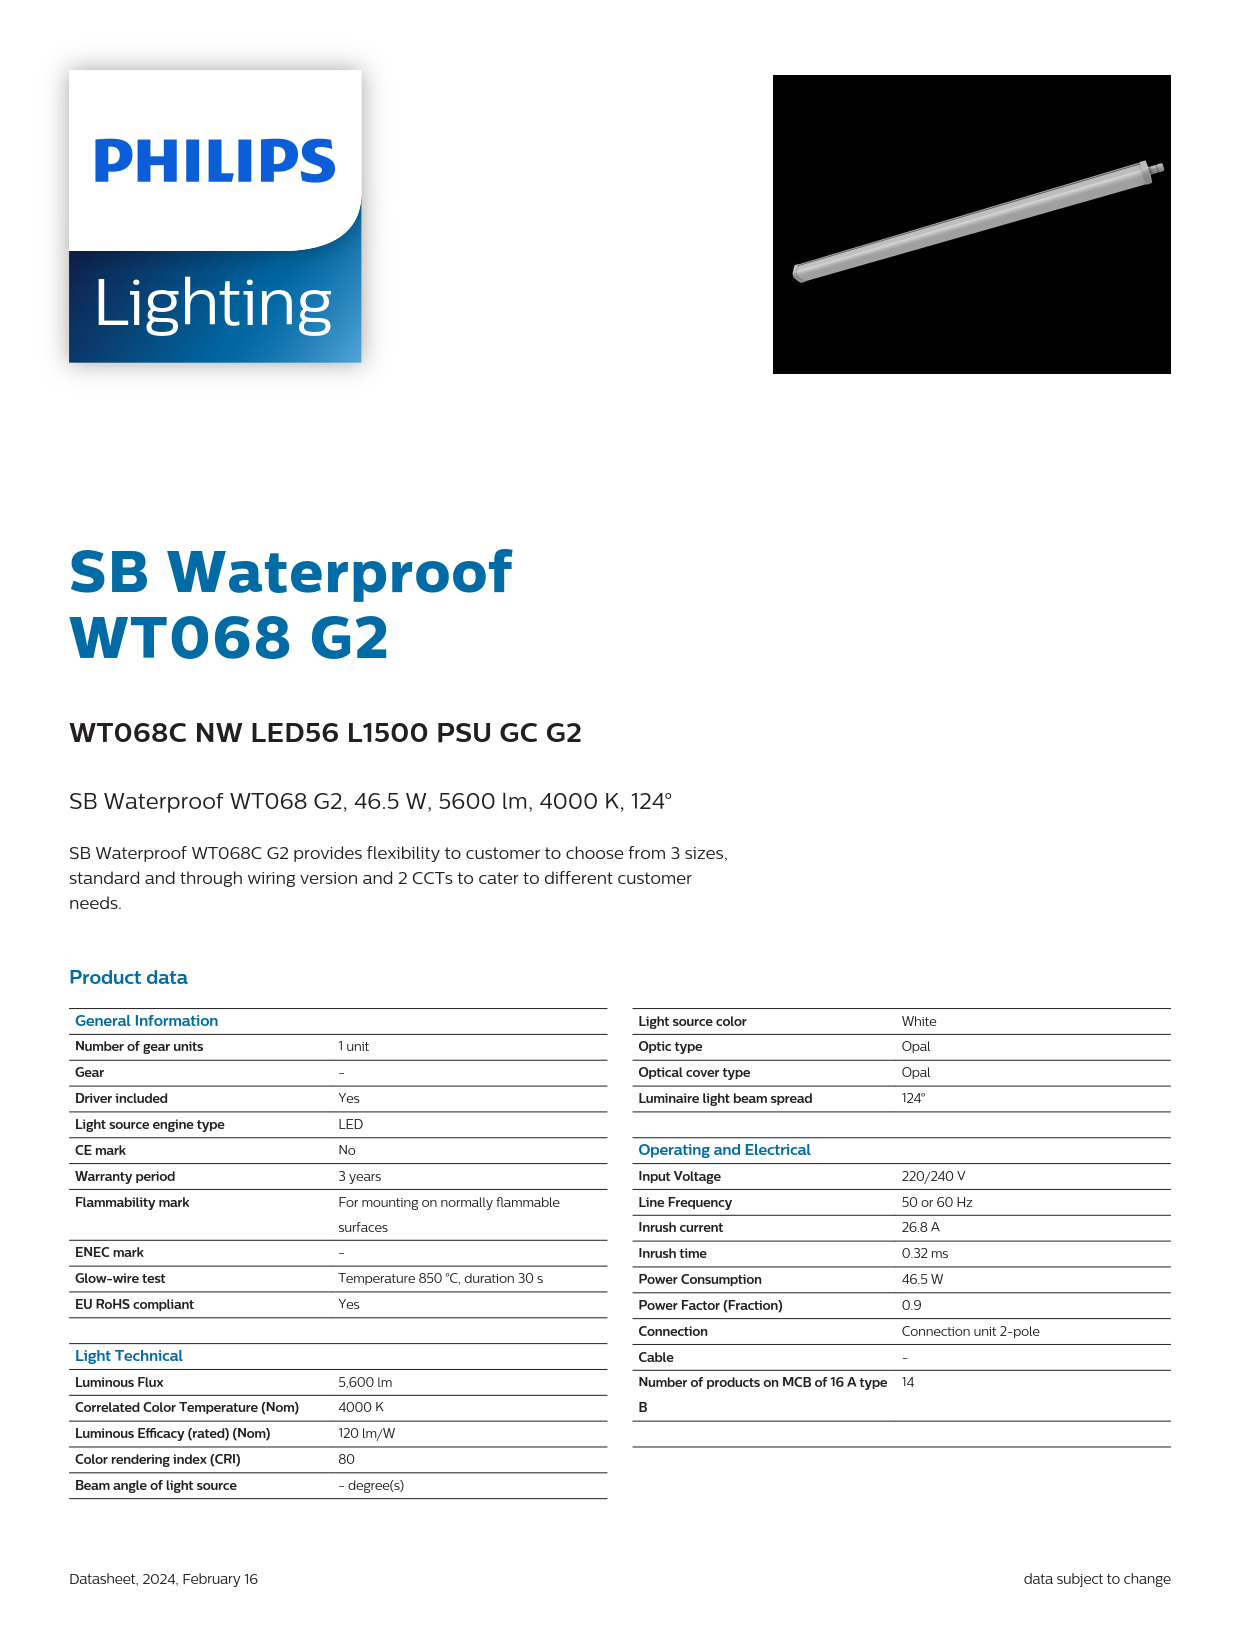 PHILIPS Waterproof Fixture light WT068C NW LED56 L1500 PSU GC G2 911401861985